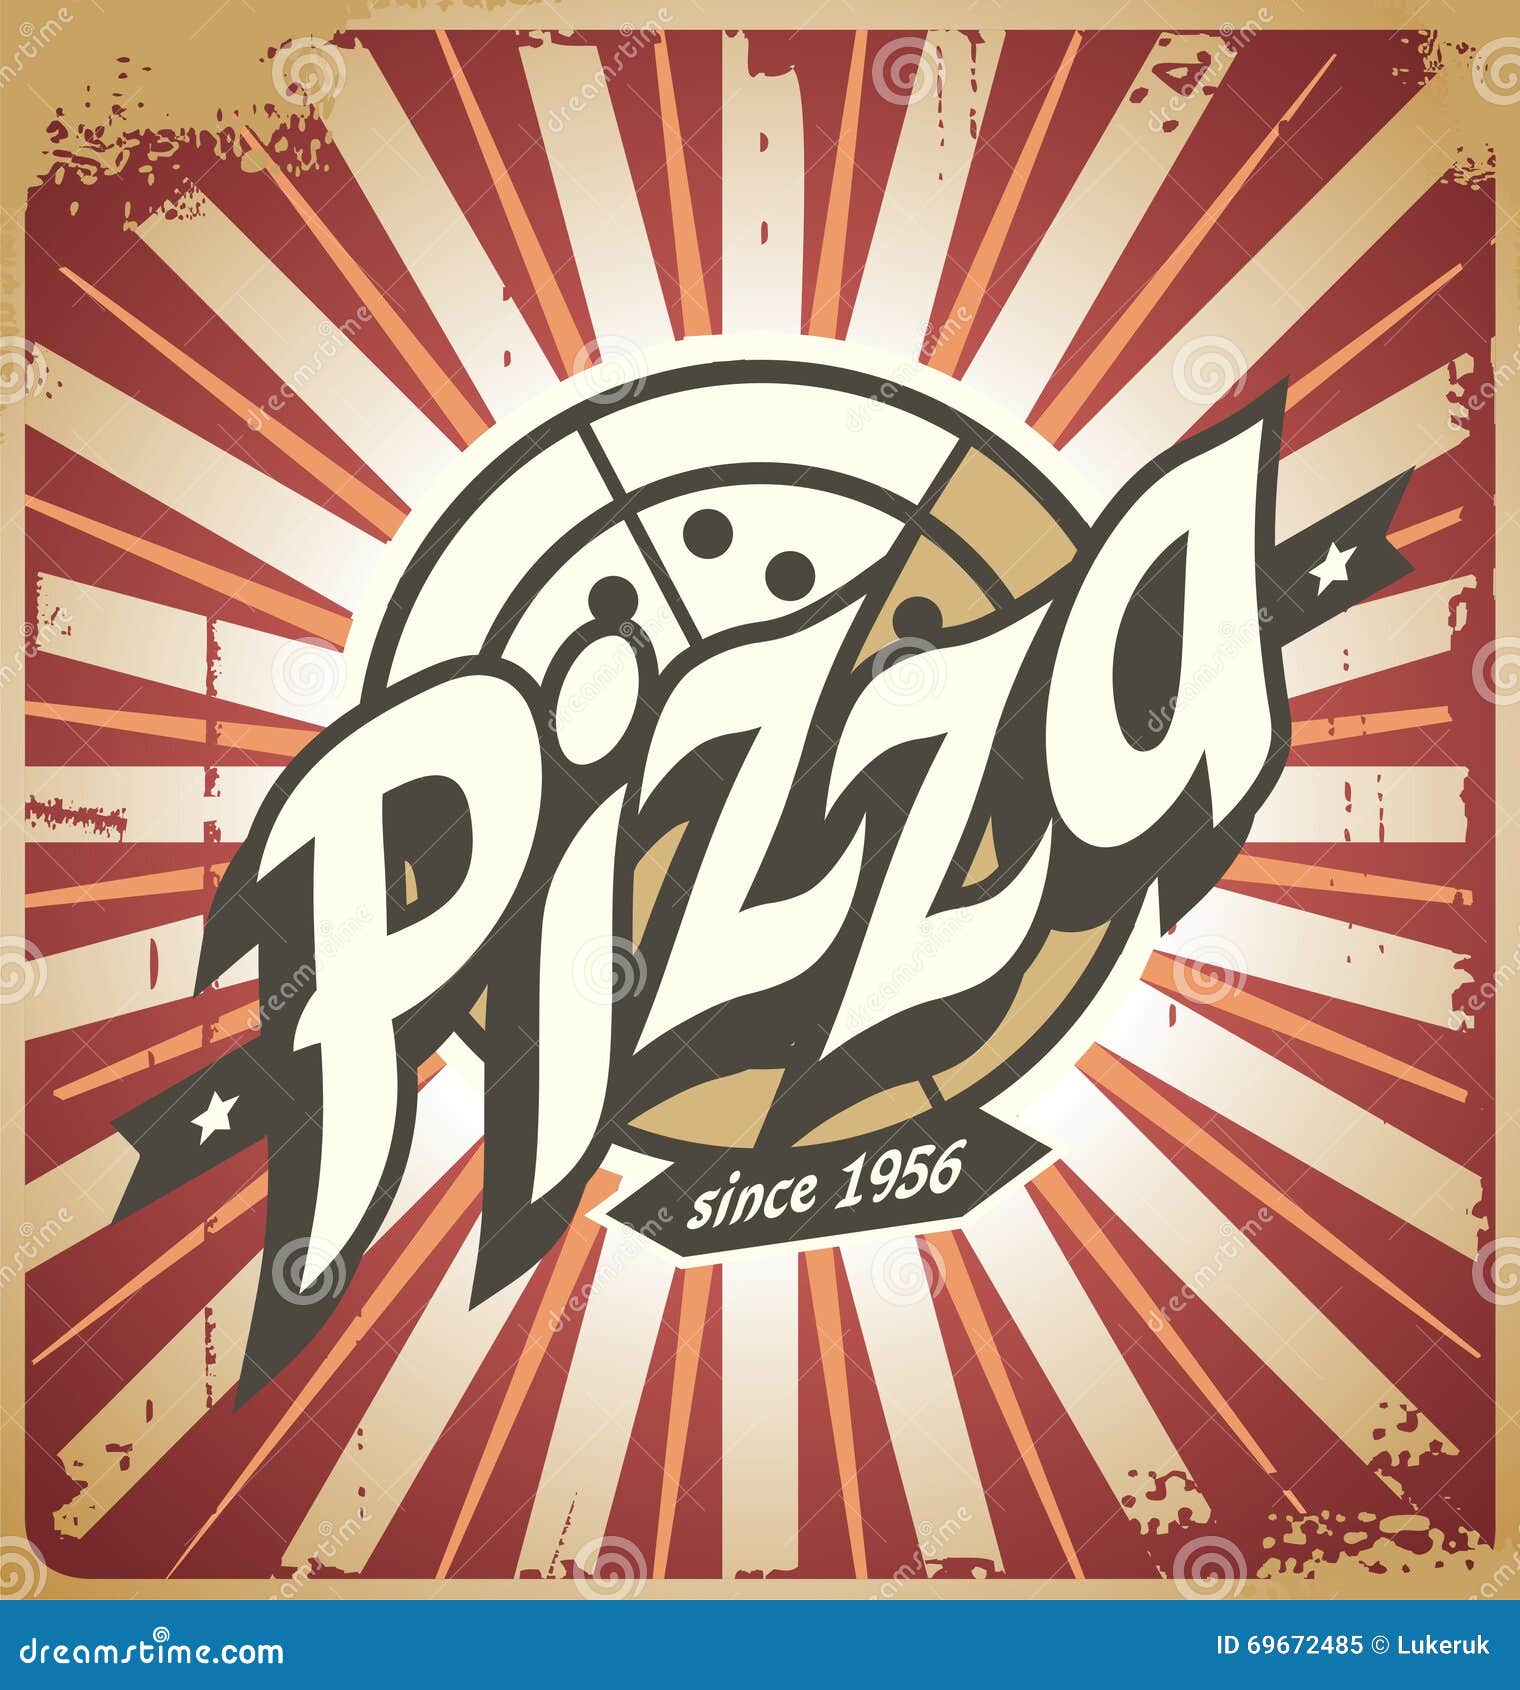 Download Retro Pizza Sign, Poster, Template Or Pizza Box Design Stock Vector - Image: 69672485